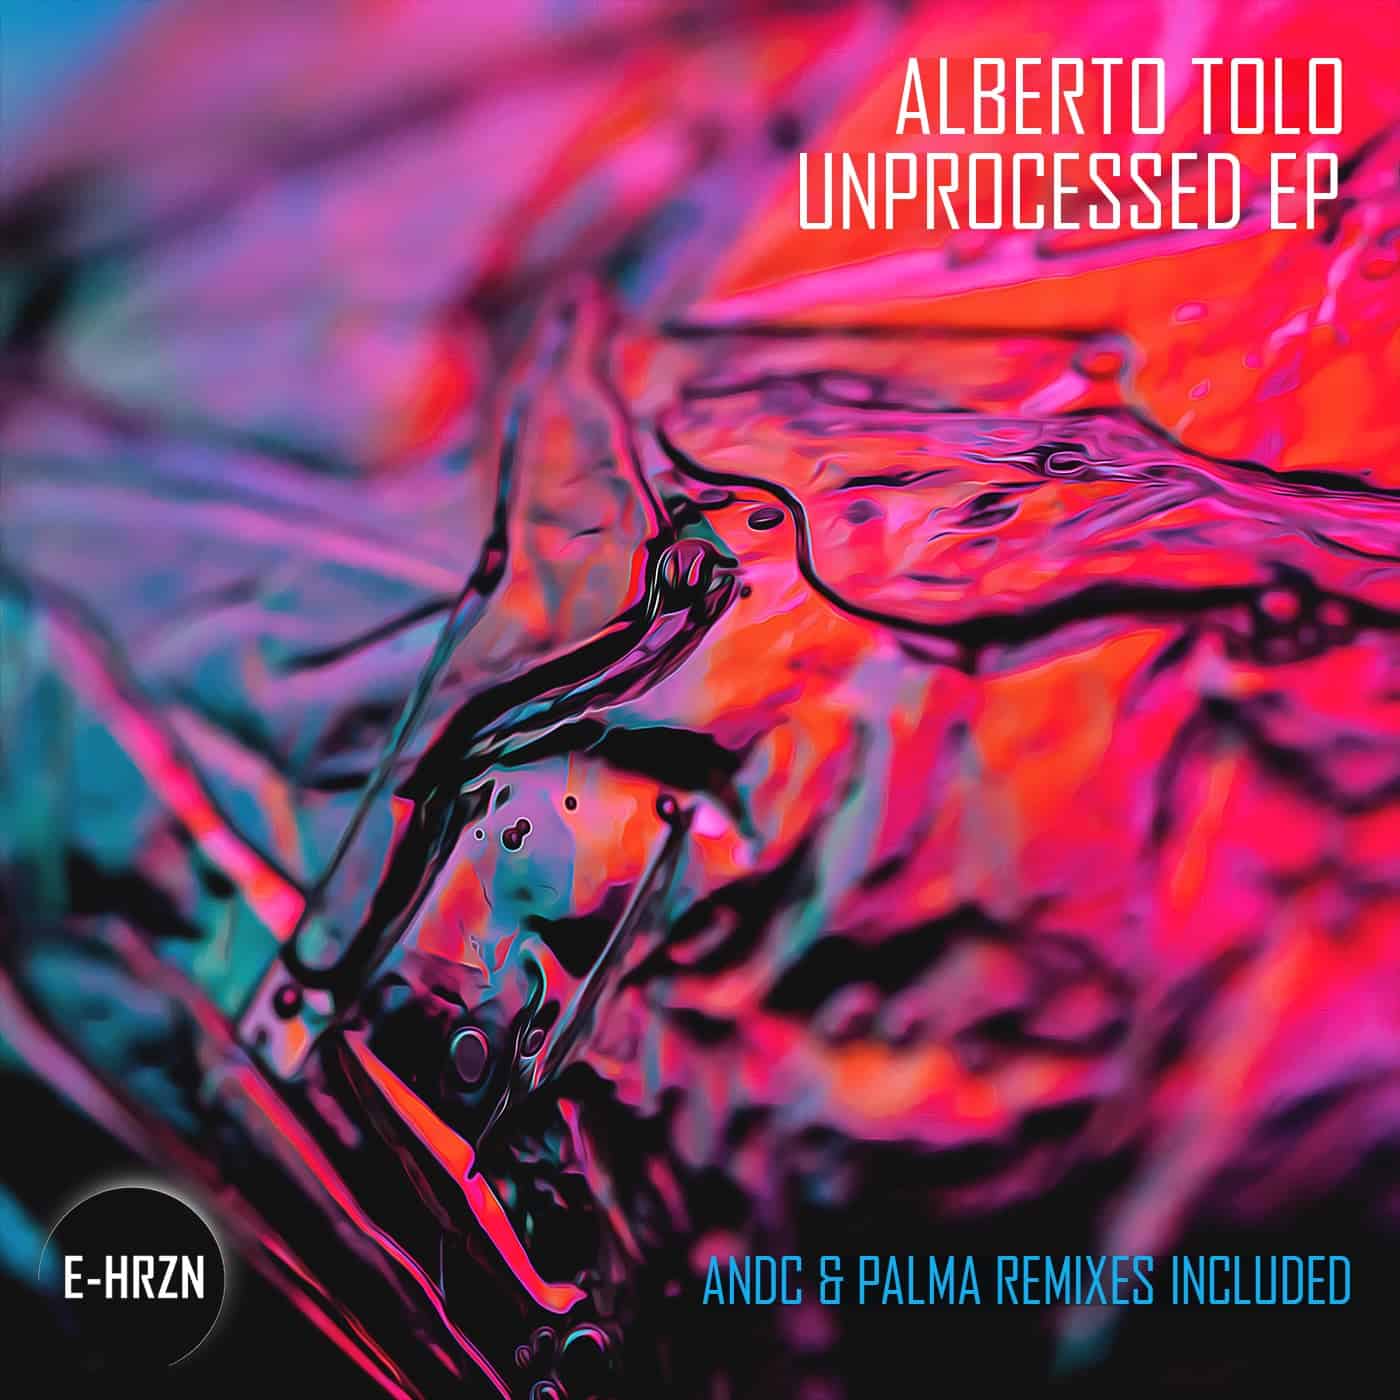 image cover: Alberto Tolo, Andc, Palma - UNPROCESSED EP / EHRZN0004